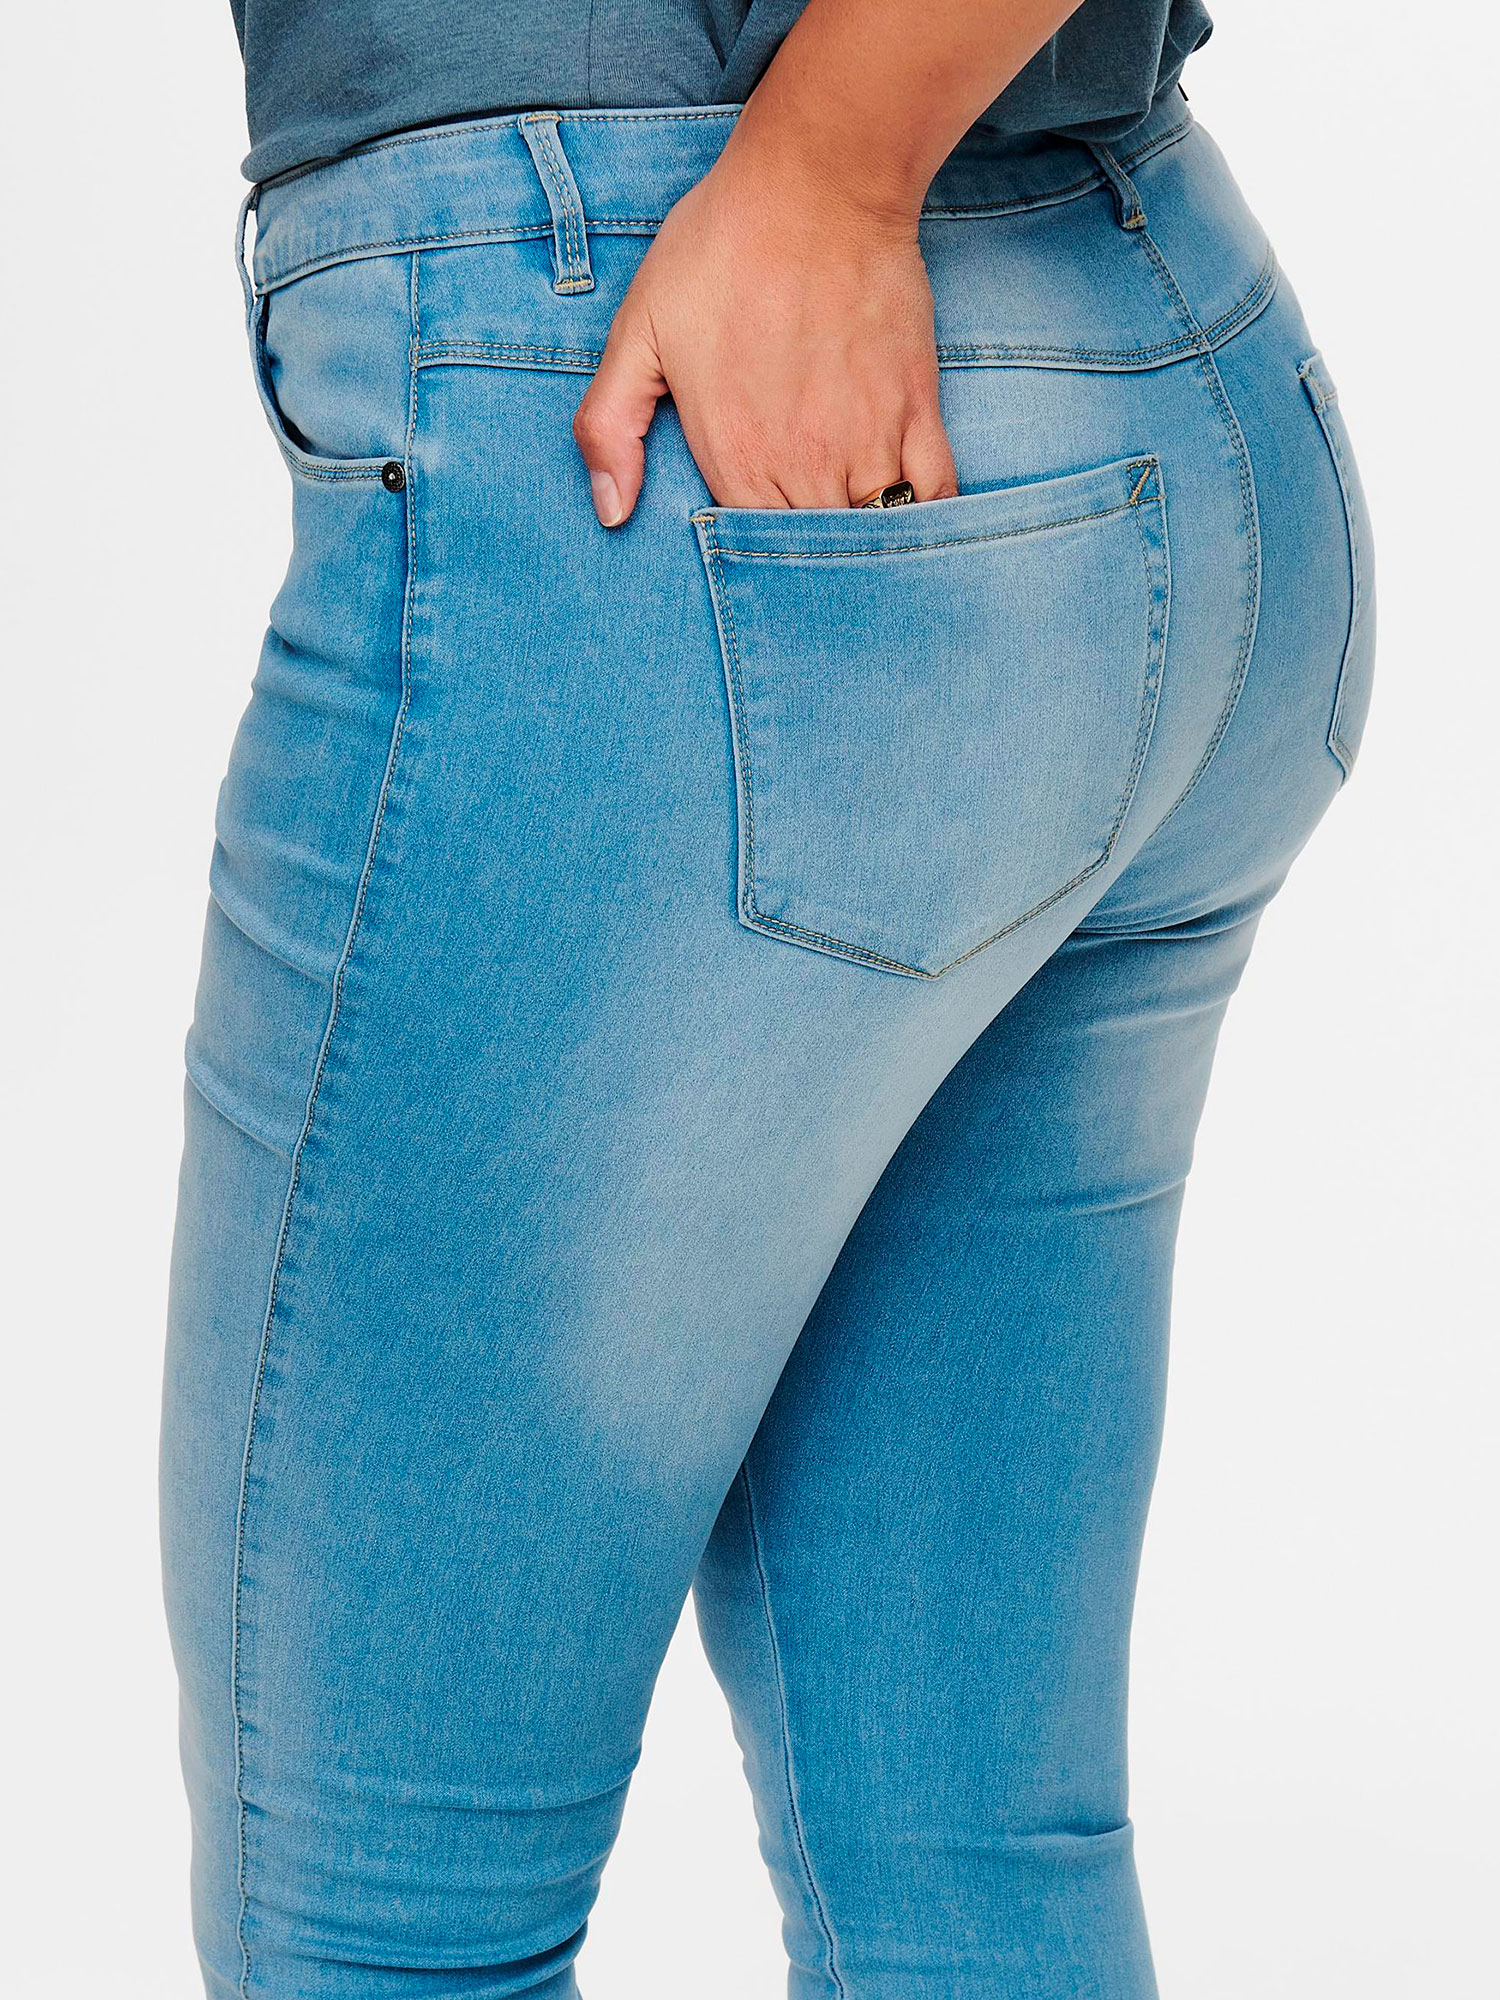 AUGUSTA - Ljusblå jeans i stretchig bomullsdenim fra Only Carmakoma